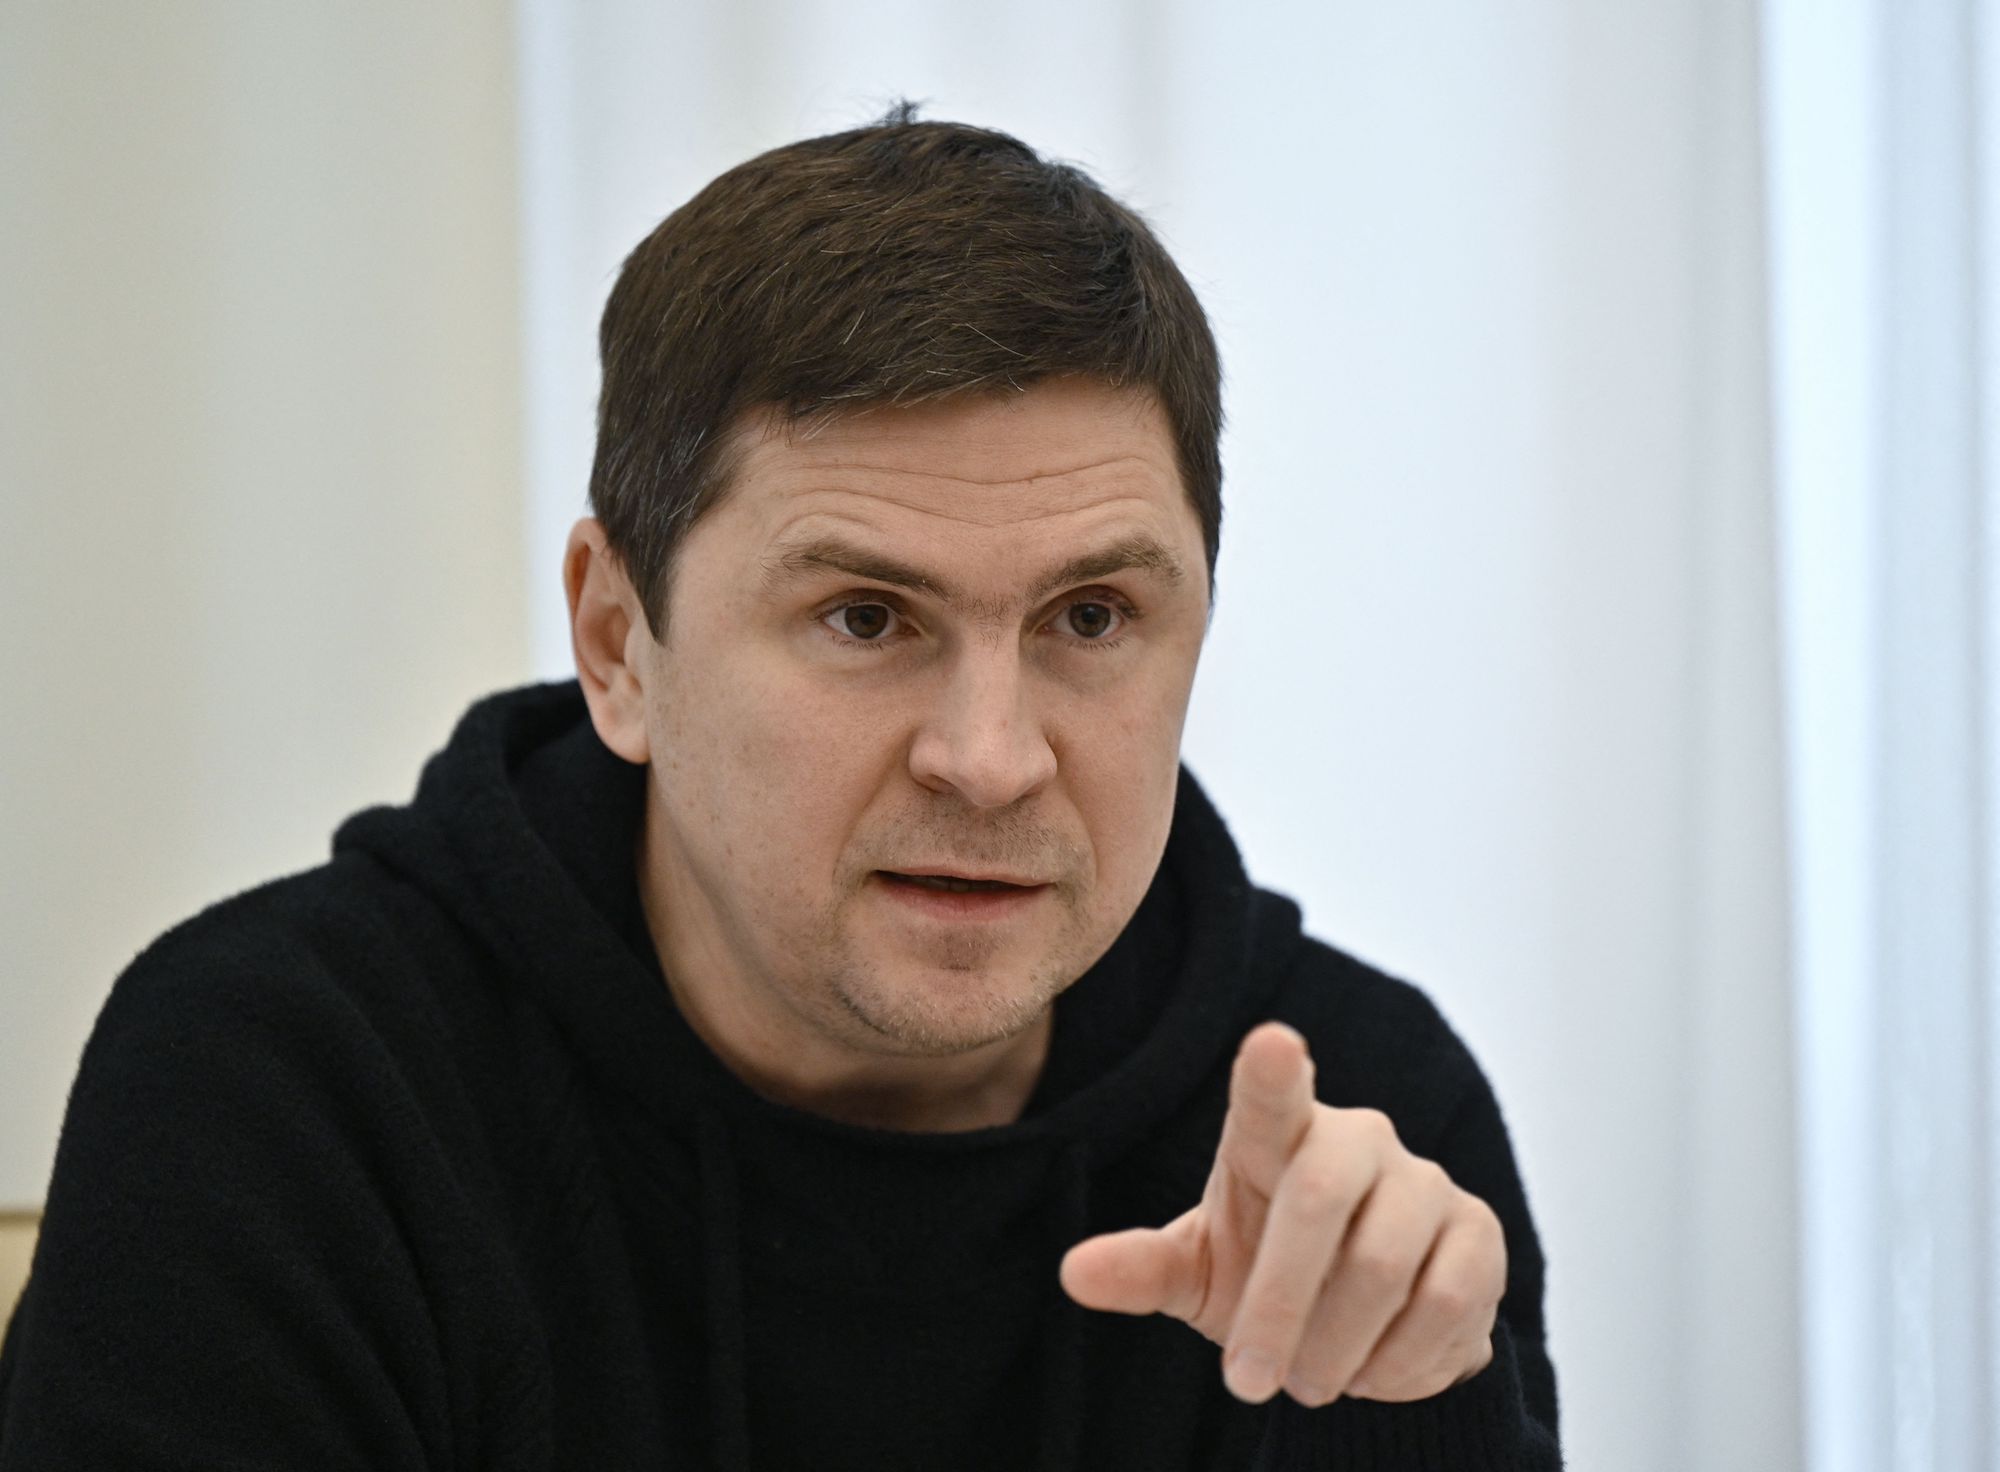 Adviser to President Zelensky, Mykhailo Podolyak, speaks during an interview with AFP in Kyiv on January 10.